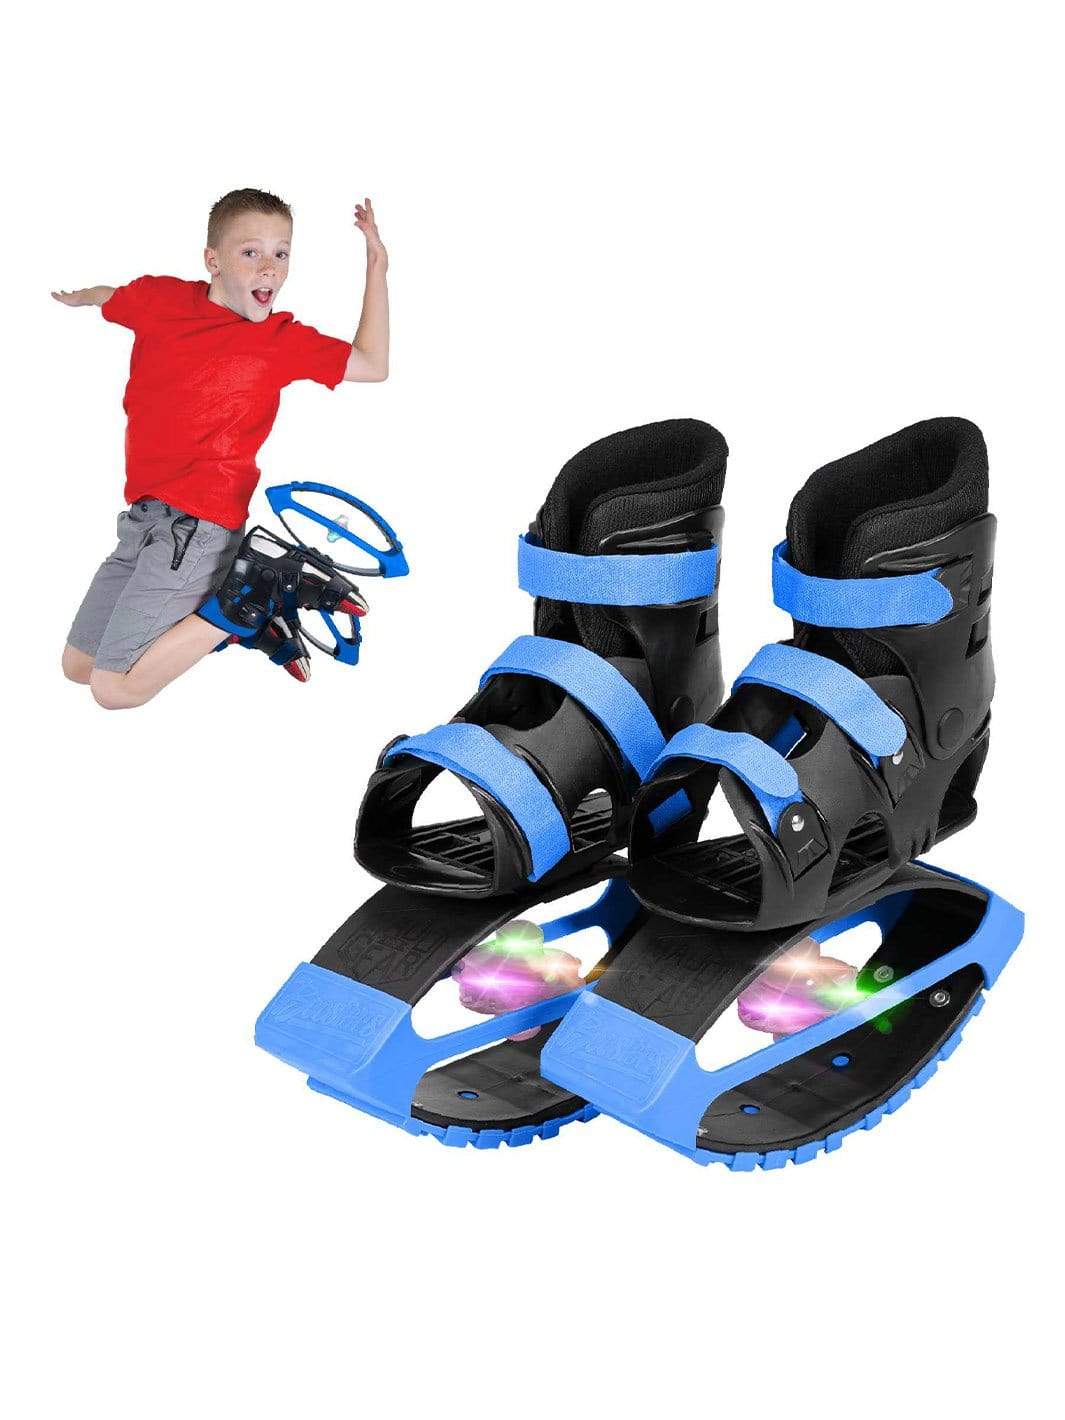 Madd Gear Boosters Boost Boots Kids Jumping Shoes Kangaroo Bouncing Kangoo Light-Up Lights LED Blue